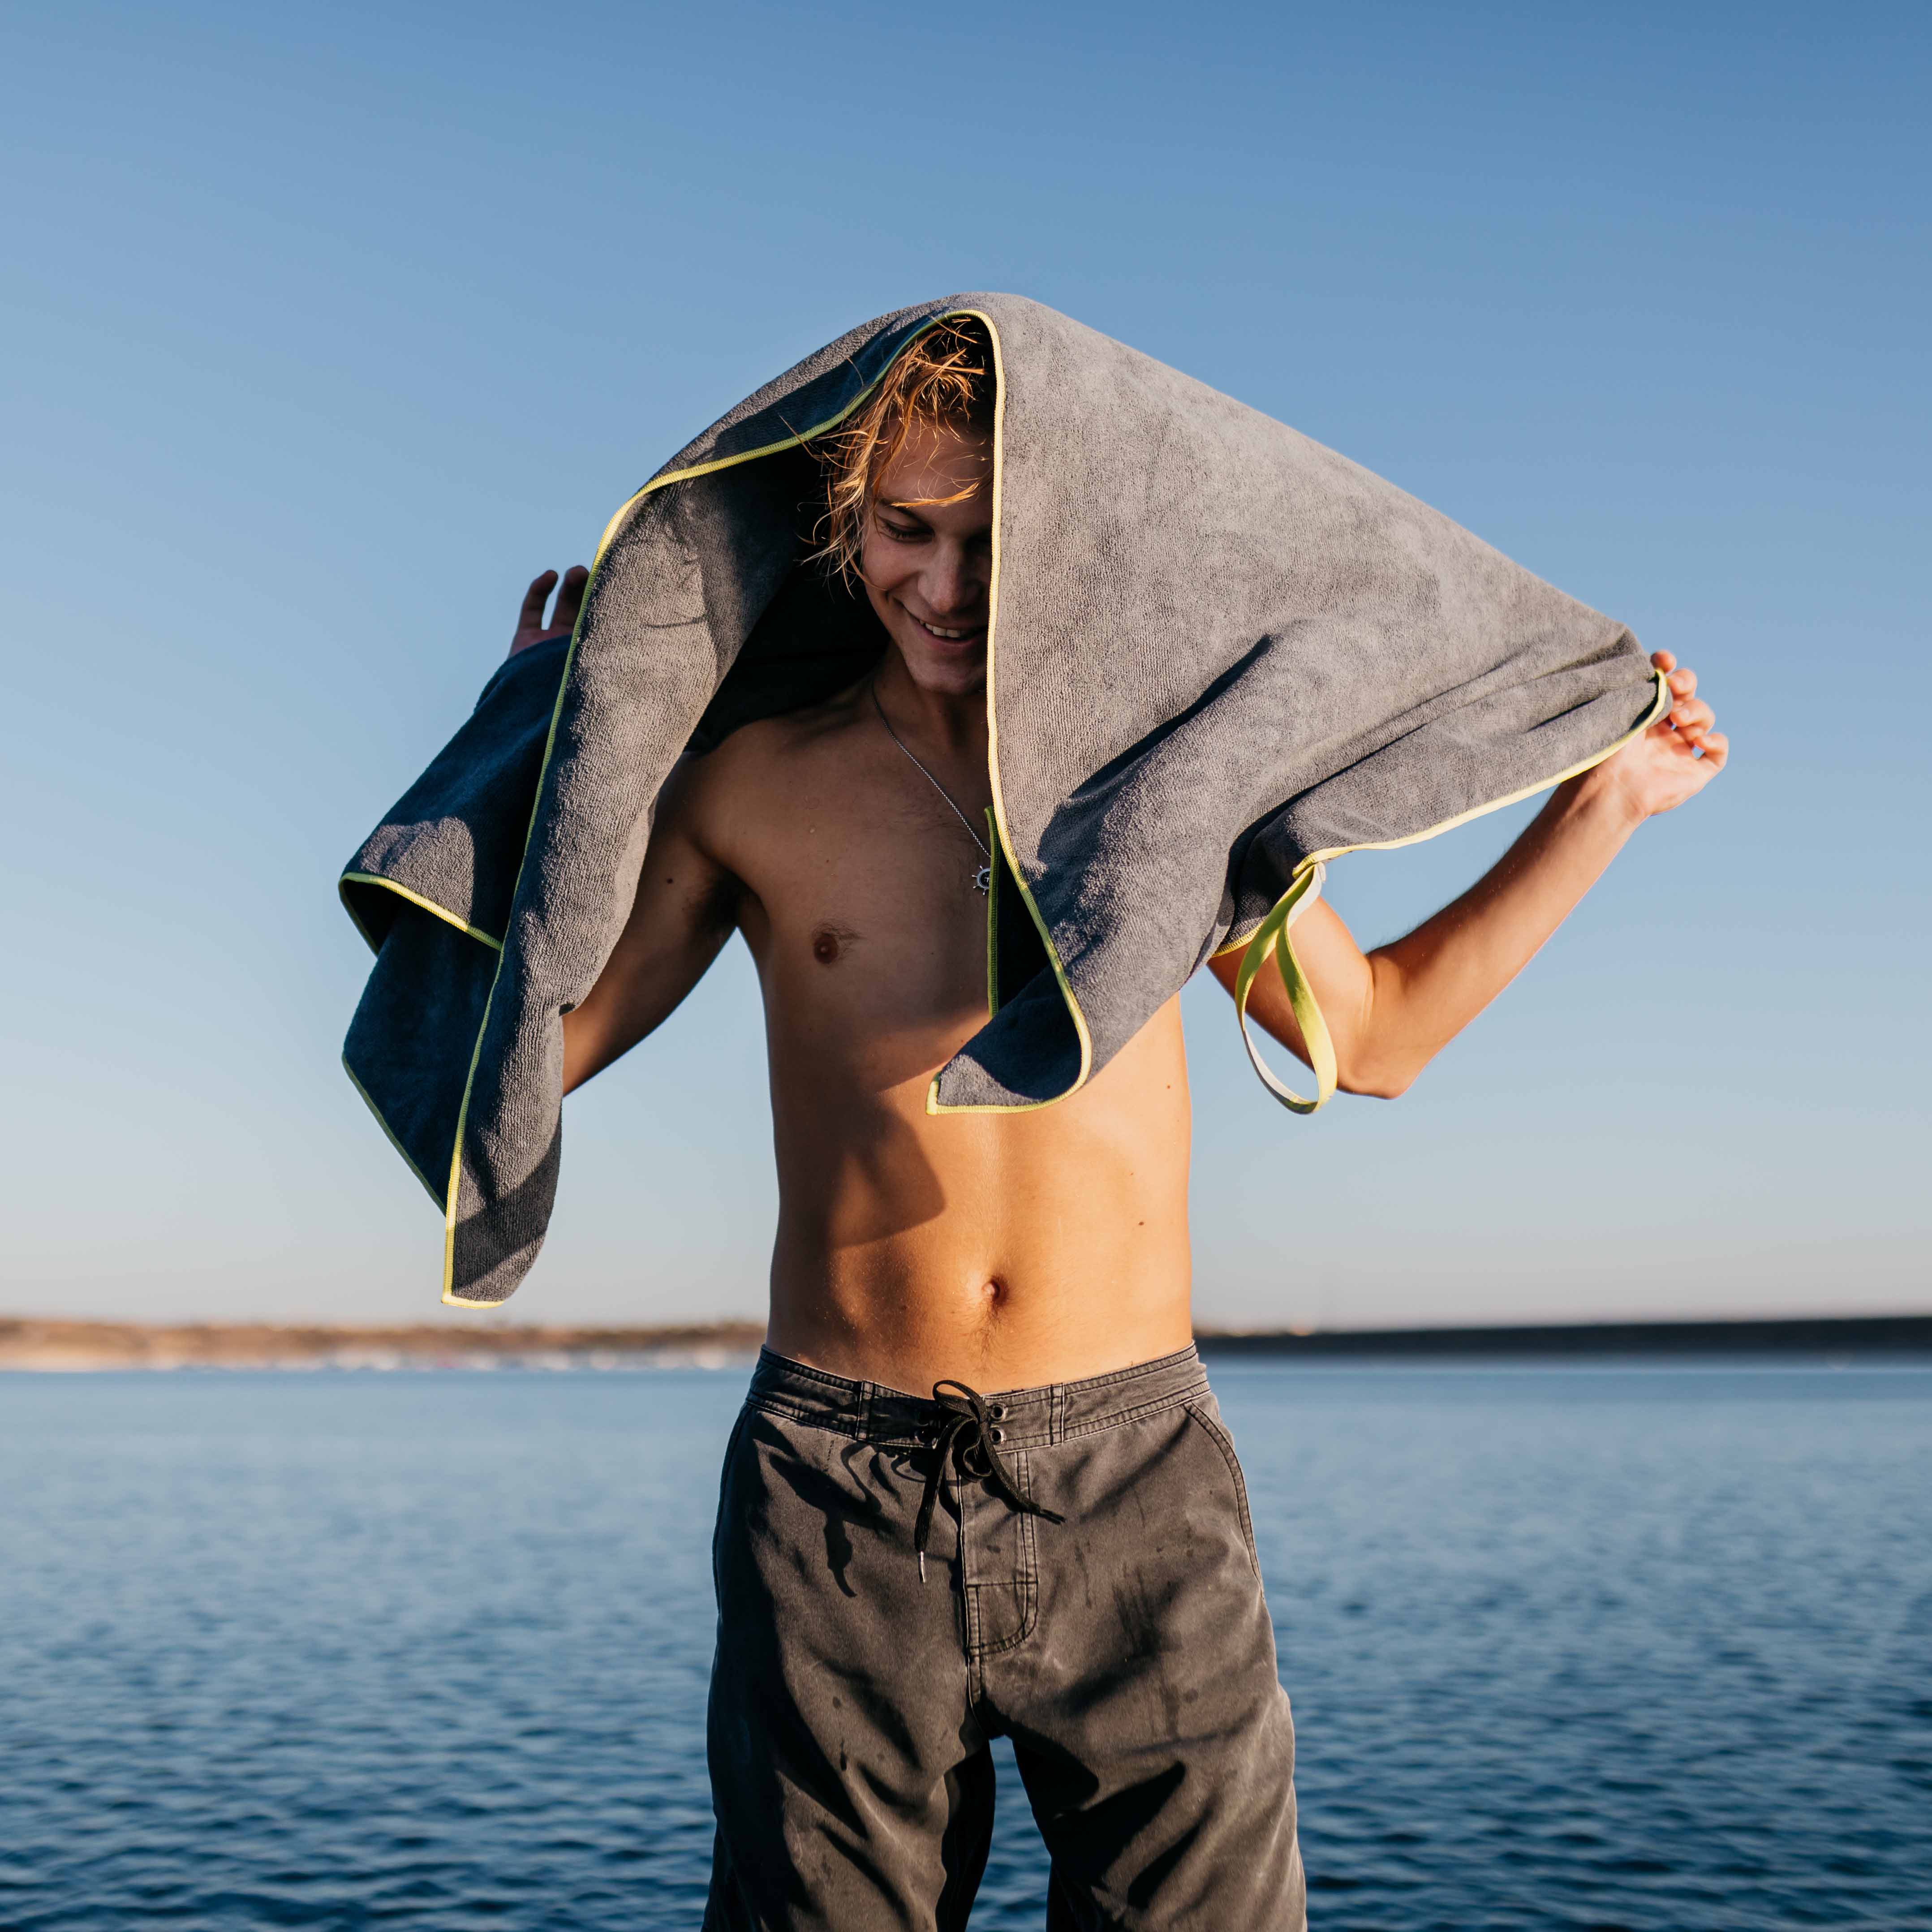 TUKO | Swim Towels | 4PK - Charcoal